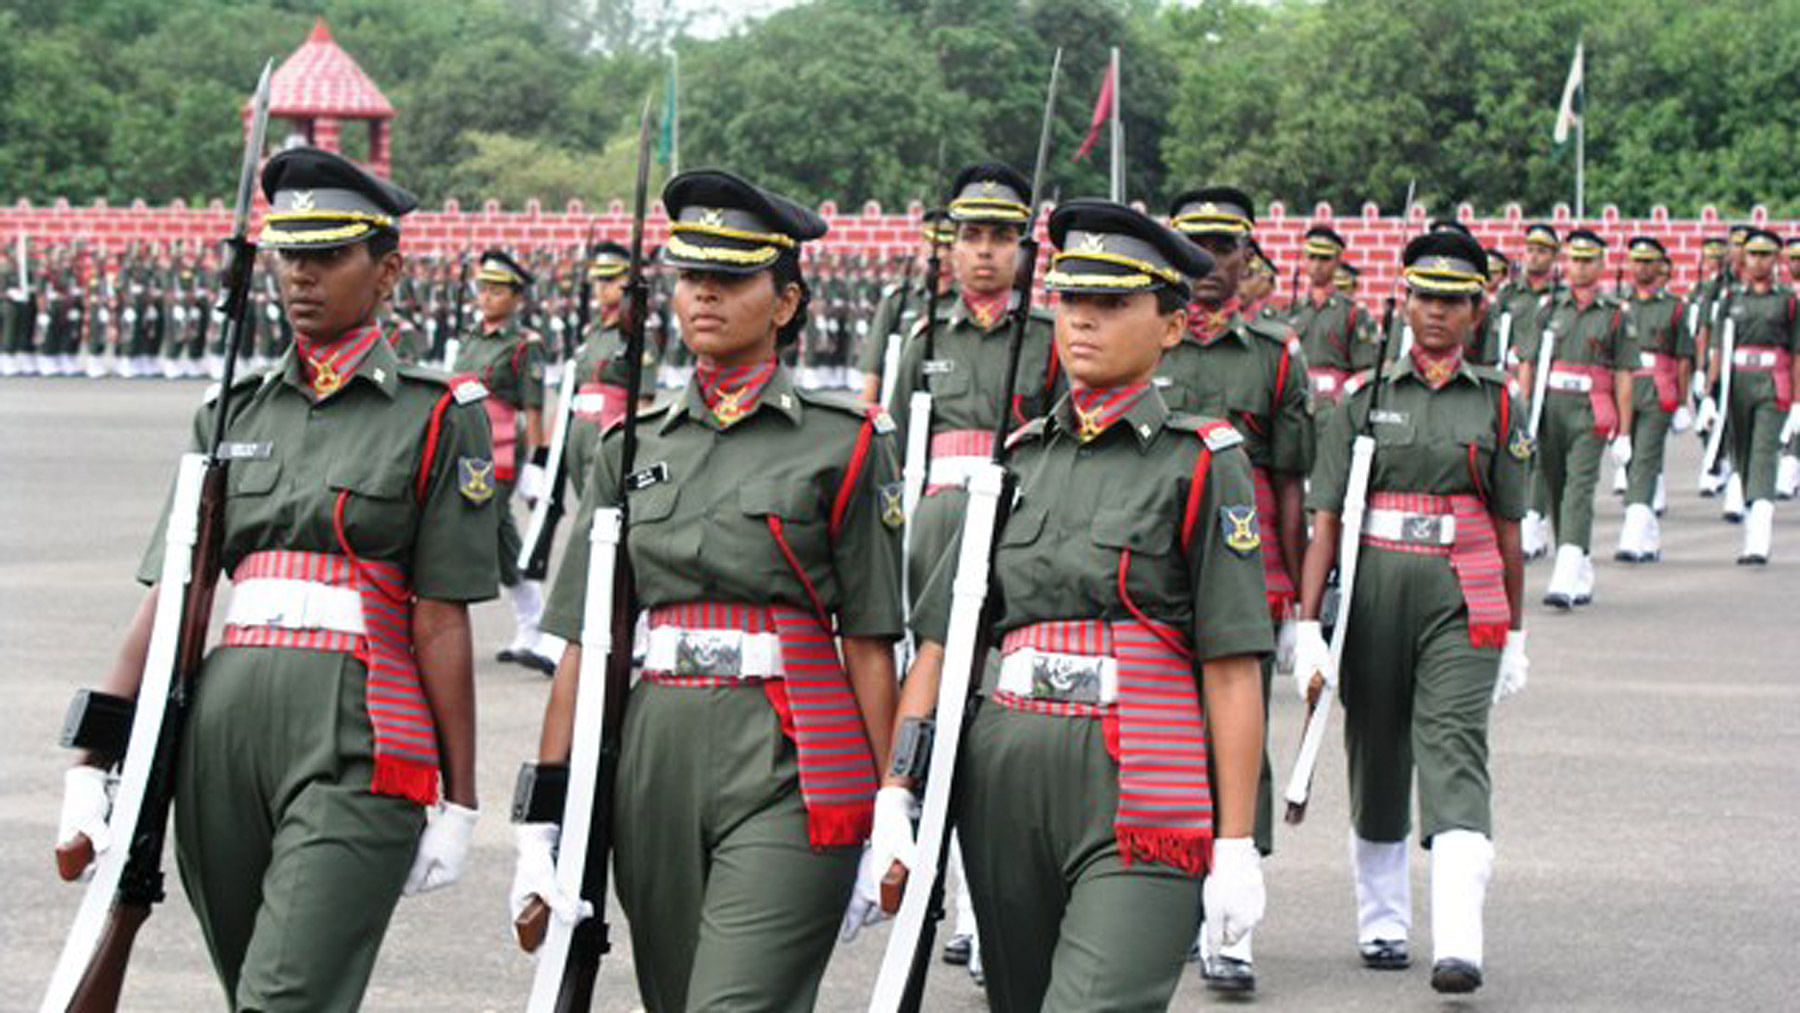 Representational image of women in Indian Army. (Photo: <a href="http://indianarmy.nic.in/Site/FormTemplete/frmTempSimple.aspx?MnId=j8Qh4rk2OU66S68cu76kMQ==&amp;ParentID=PiU7fyG1PAChsJ7CF96TdQ==">Indian Army Website</a>)